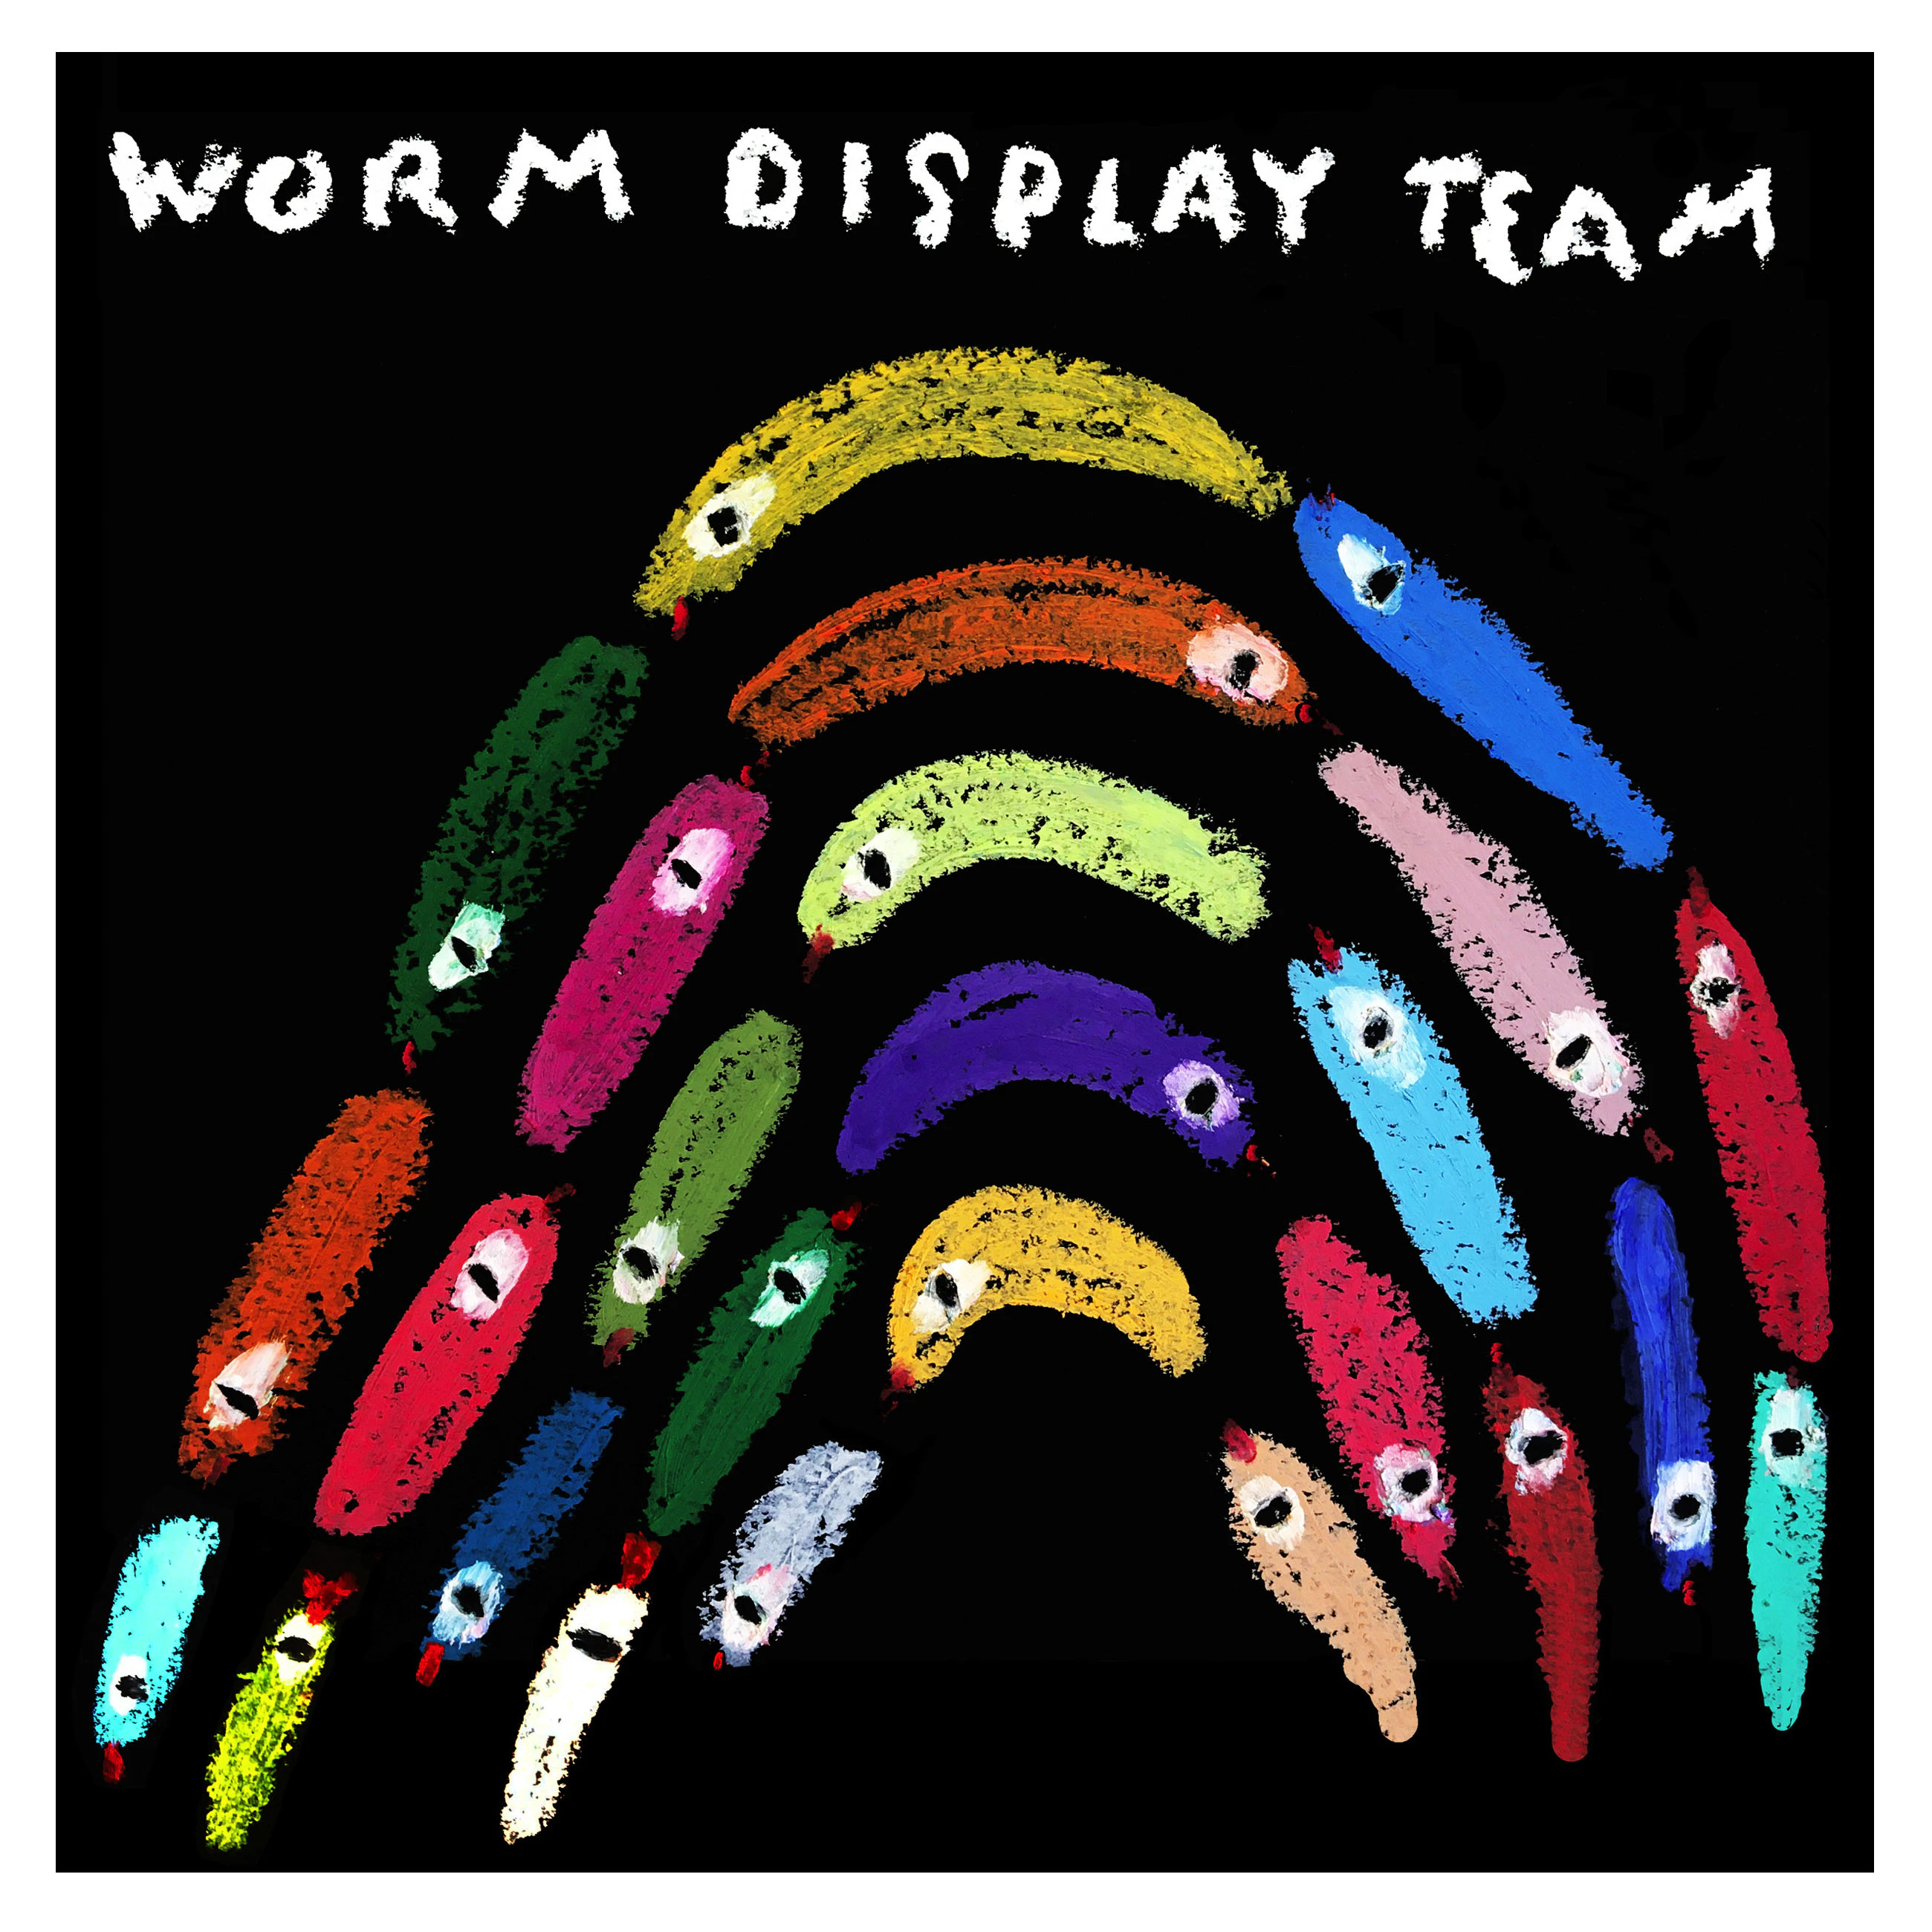 Worm Display Team